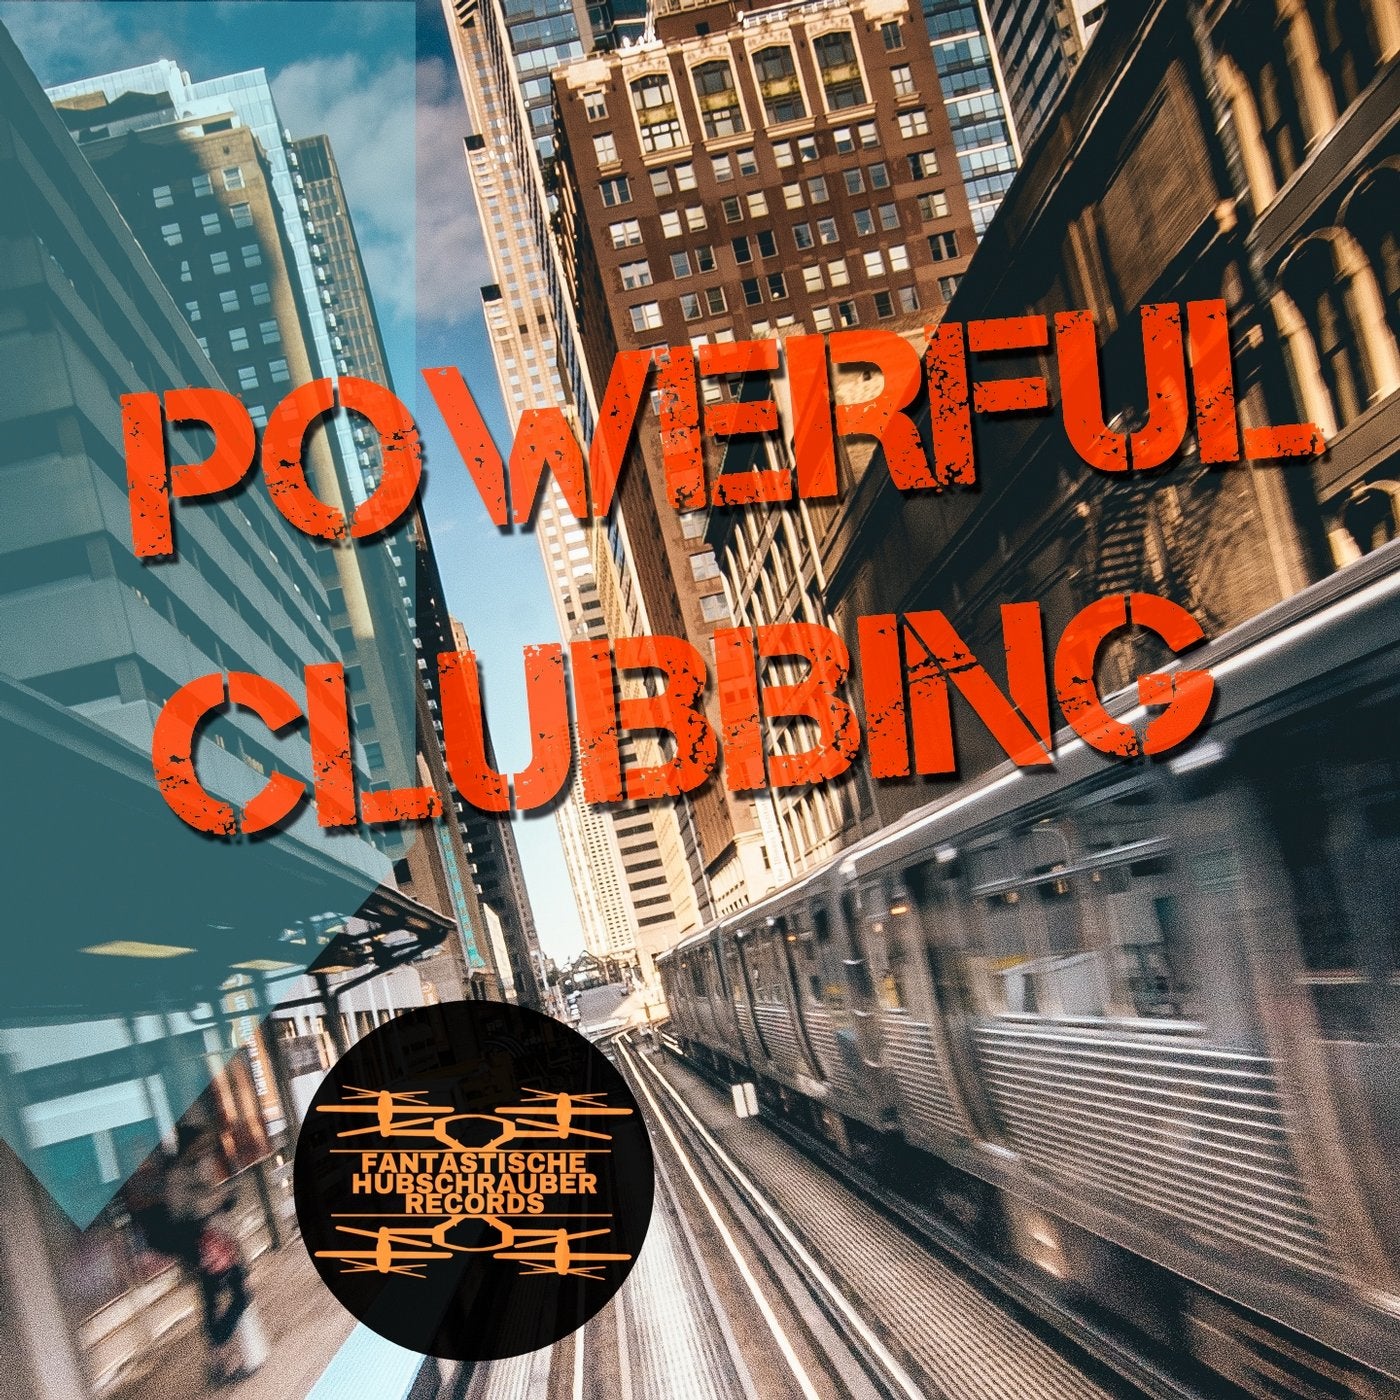 Powerful Clubbing